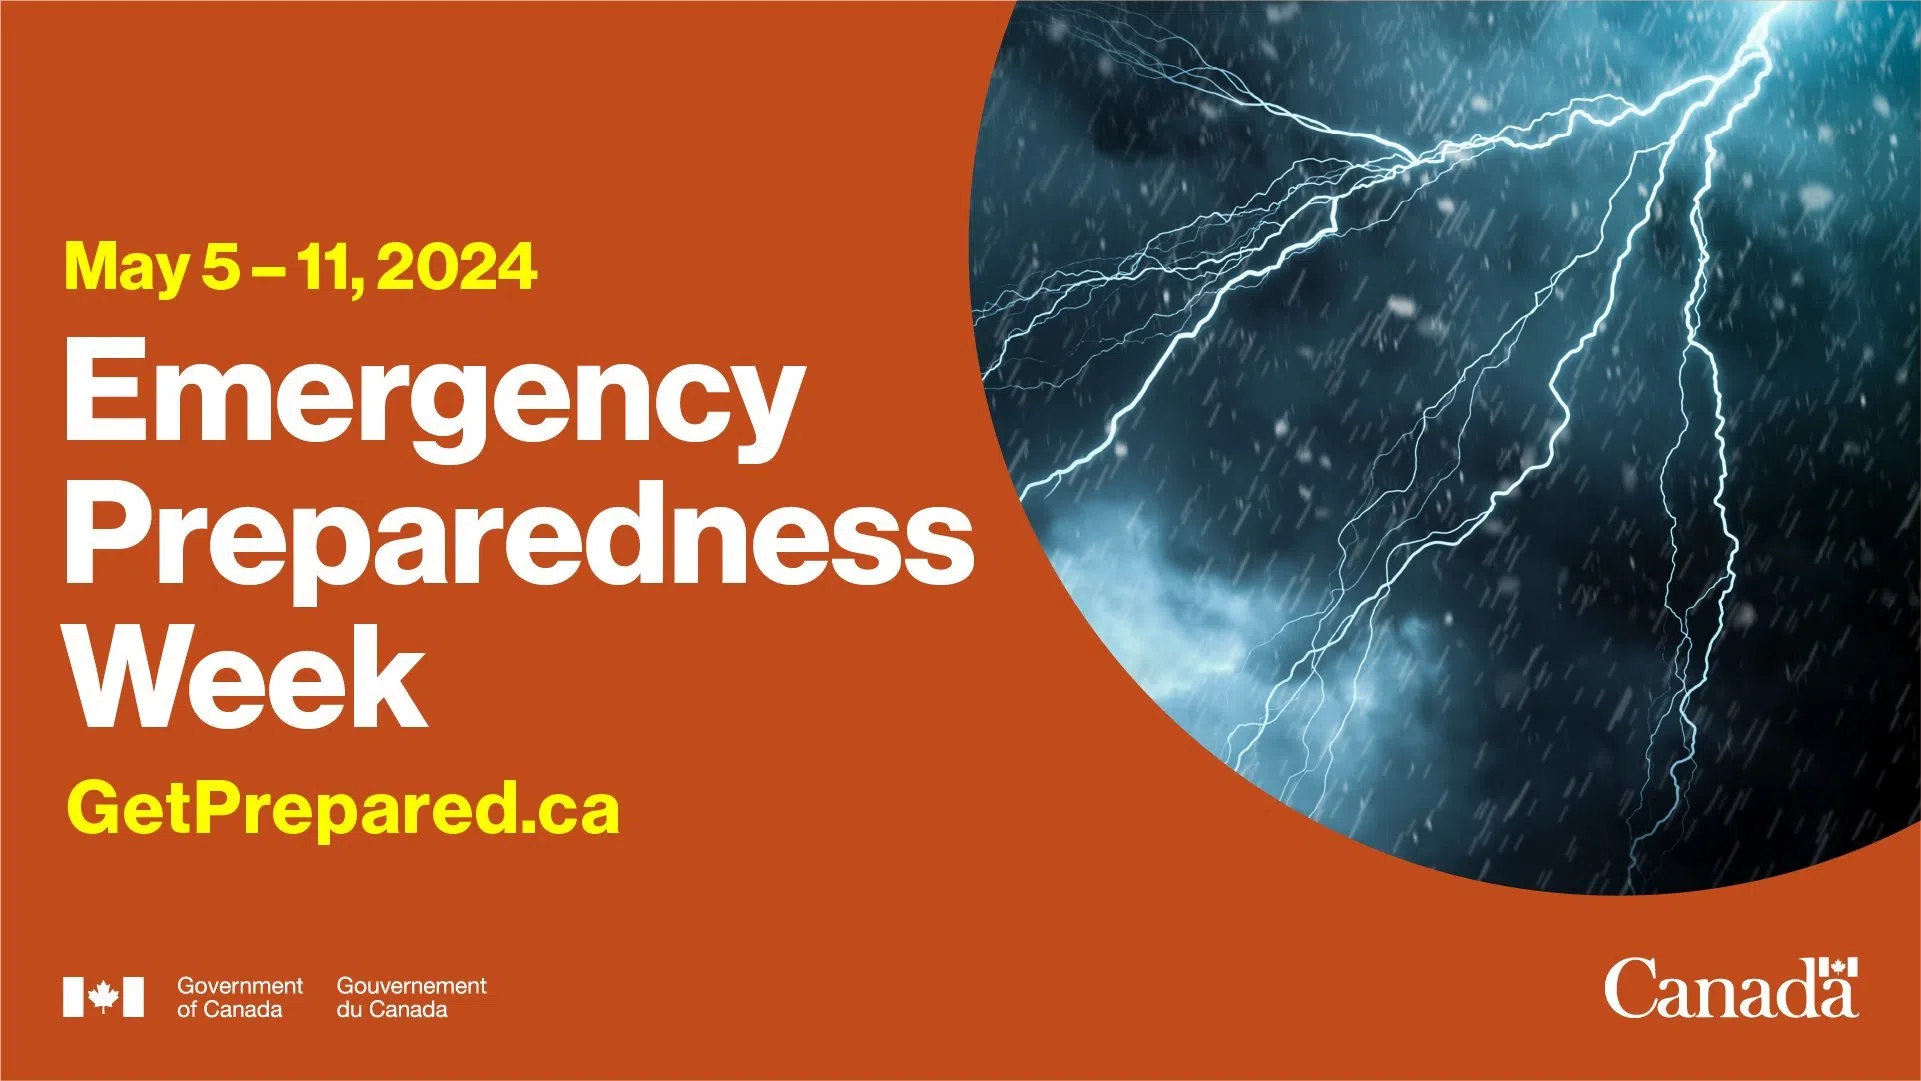 Emergency Preparedness Week in Canada